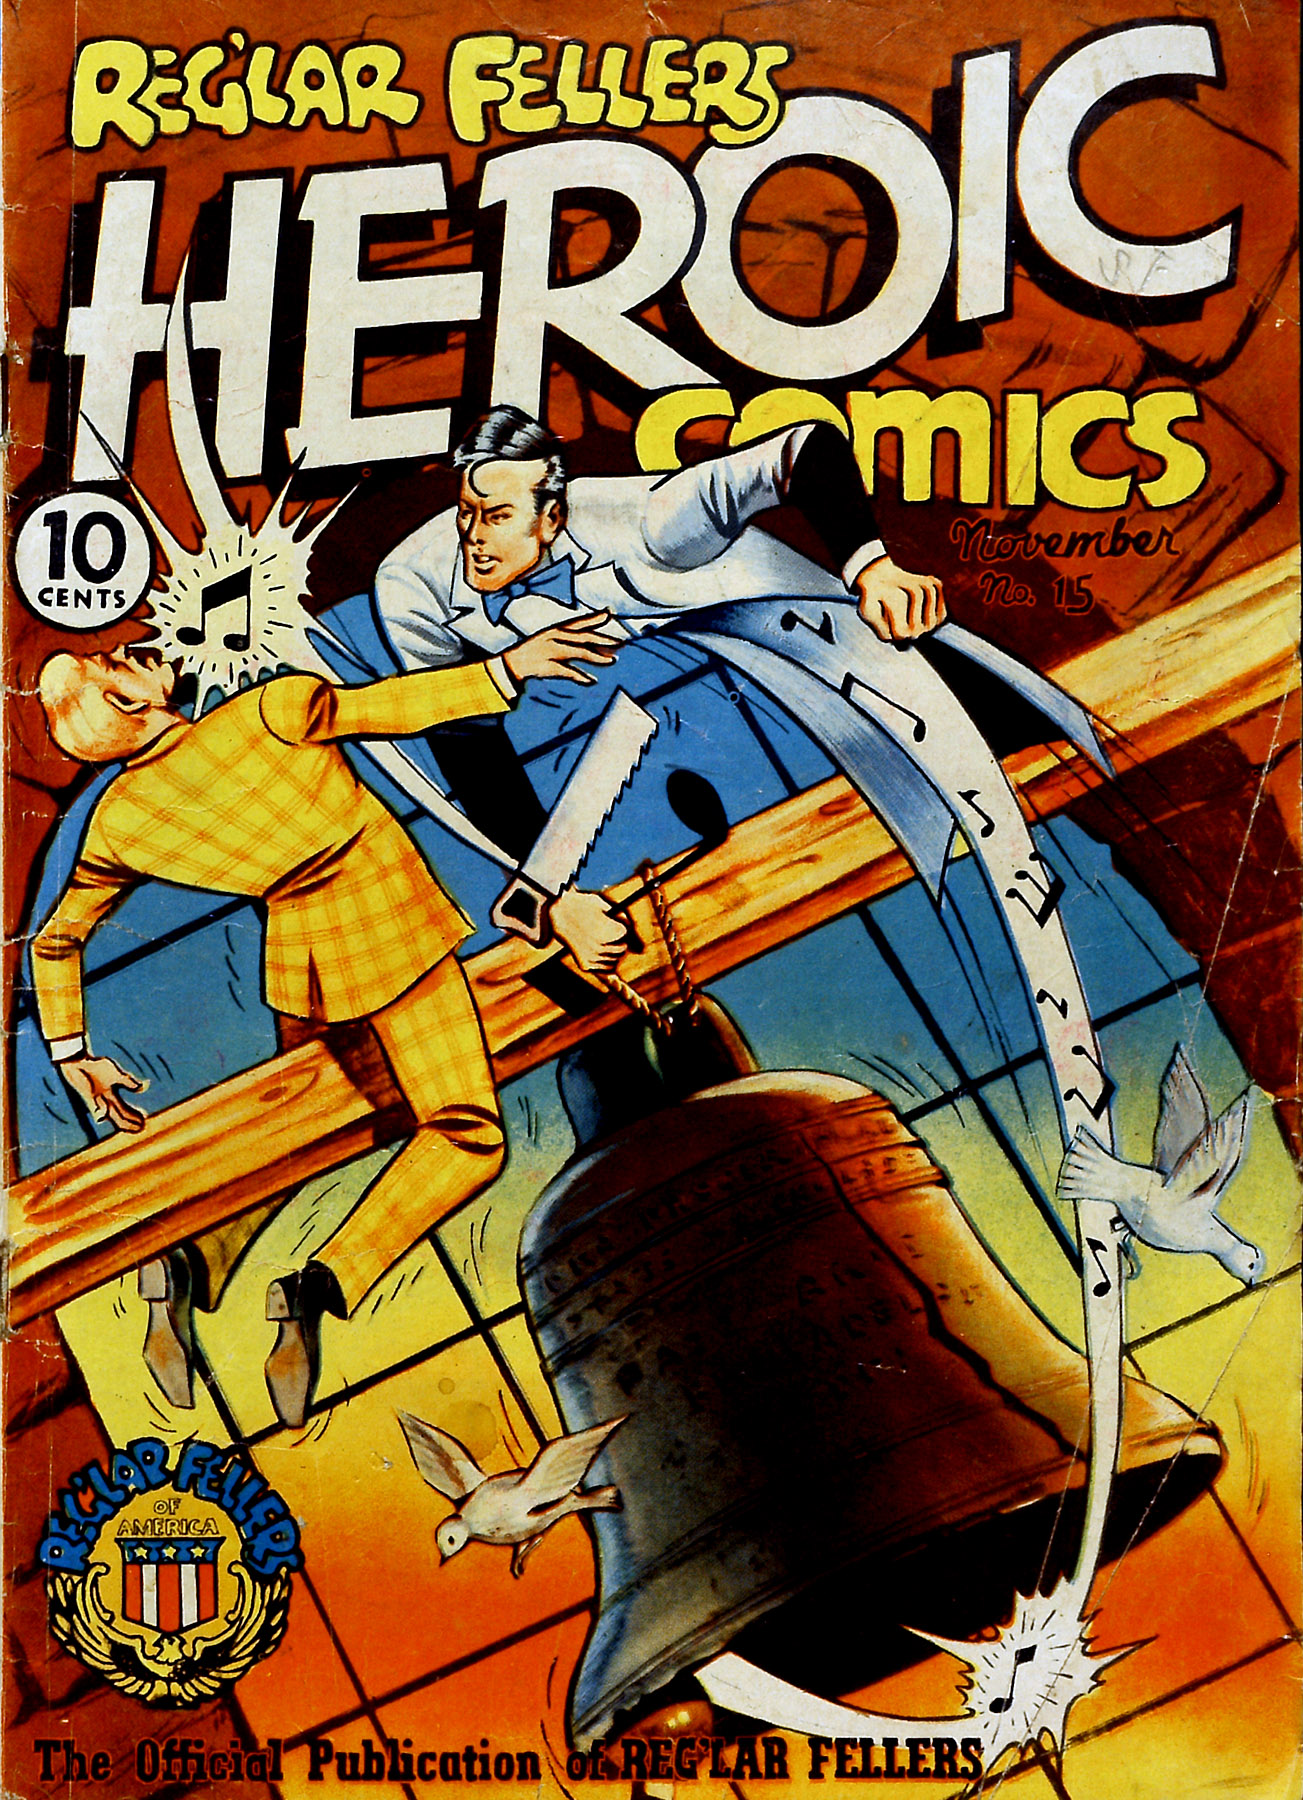 Reg'lar Fellers Heroic Comics issue 15 - Page 1